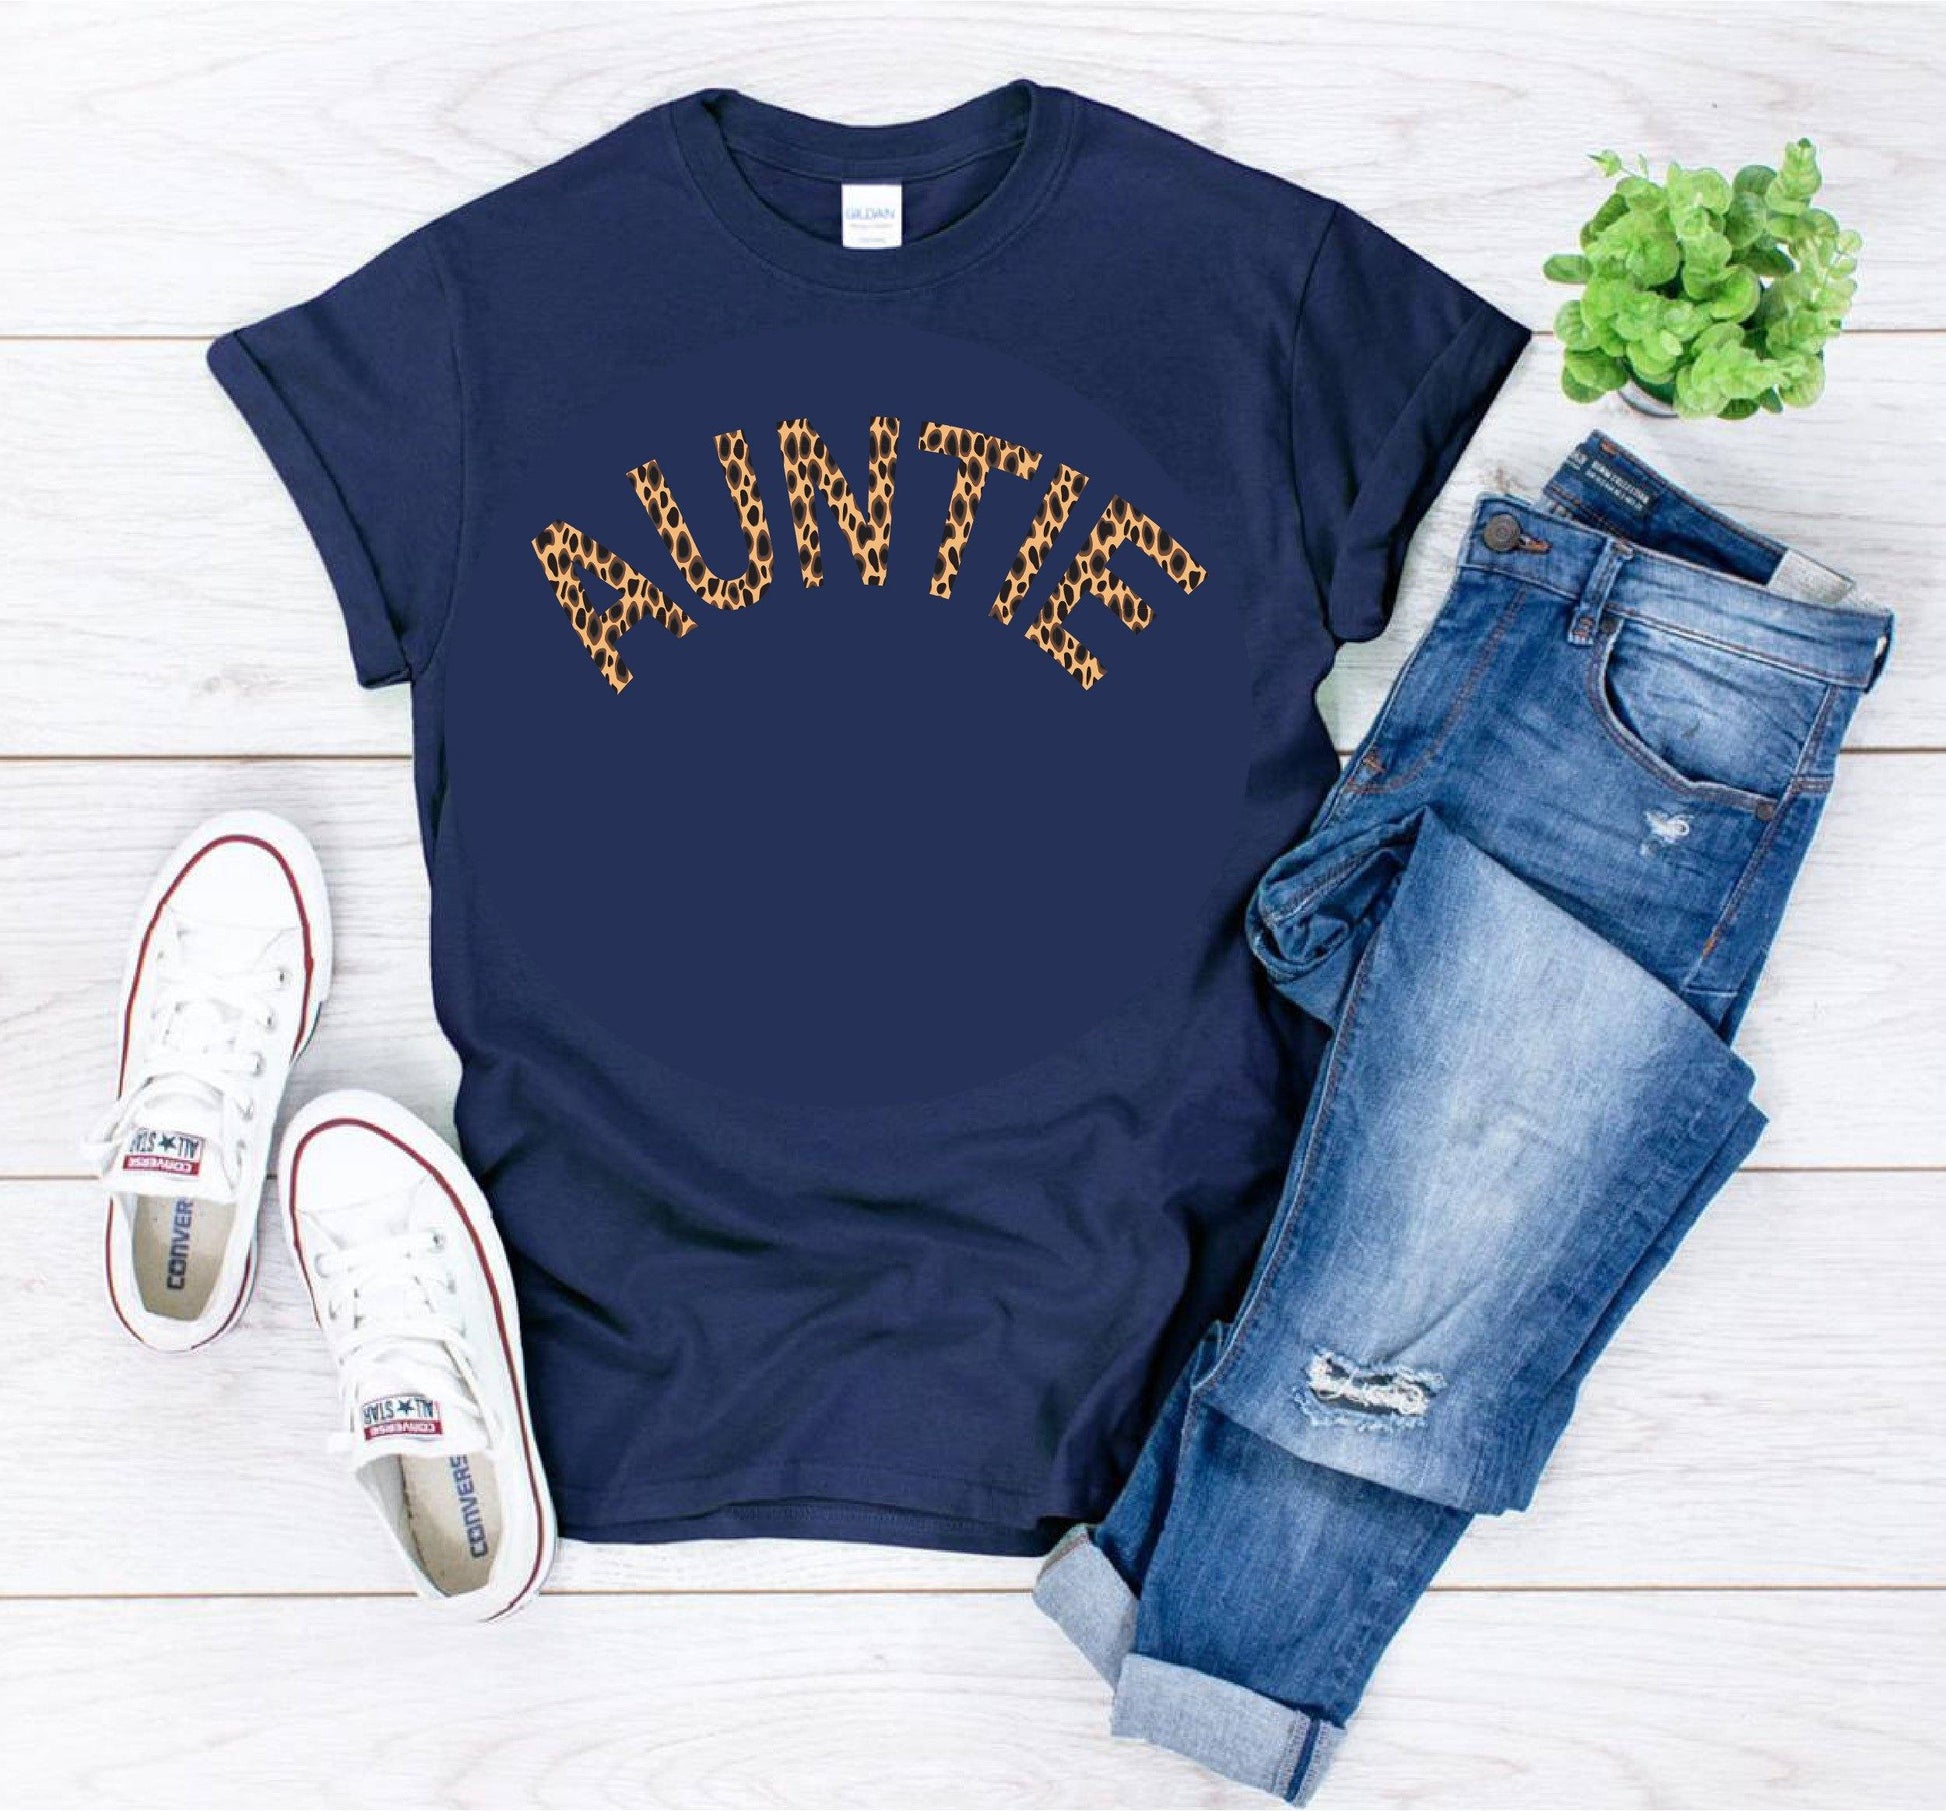 Personalised Animal Print Auntie T-shirt